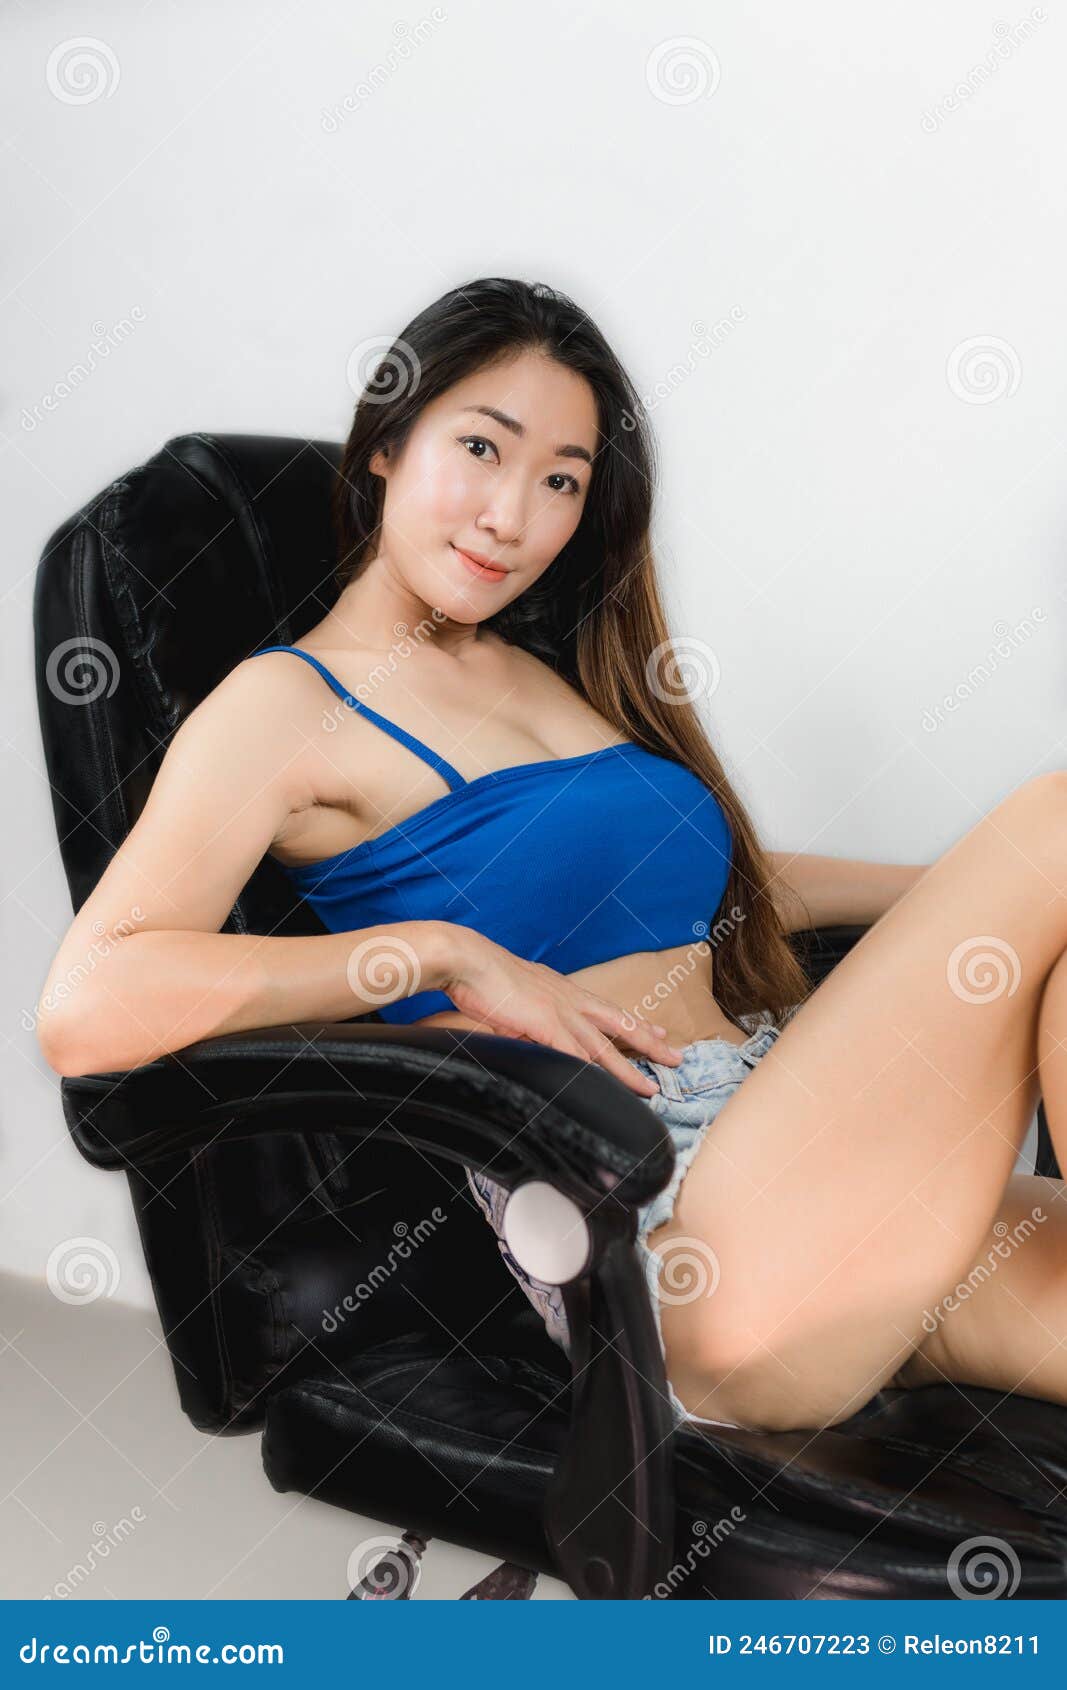 138 Sexy Asian Secretary Stock Photos